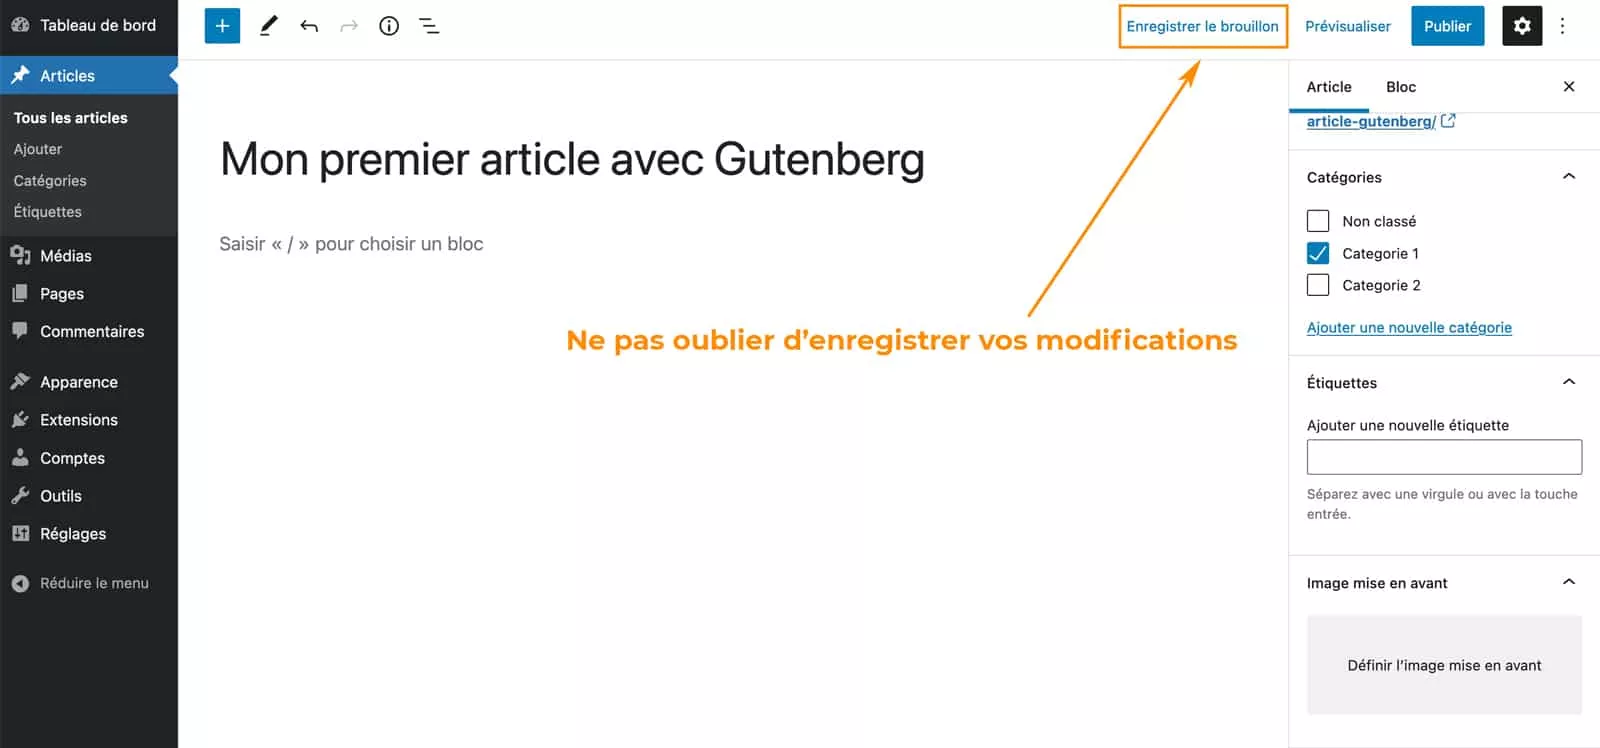 creer articles wordpress avec gutenberg 60 | Écrire des articles avec Gutenberg - Mode d'emploi